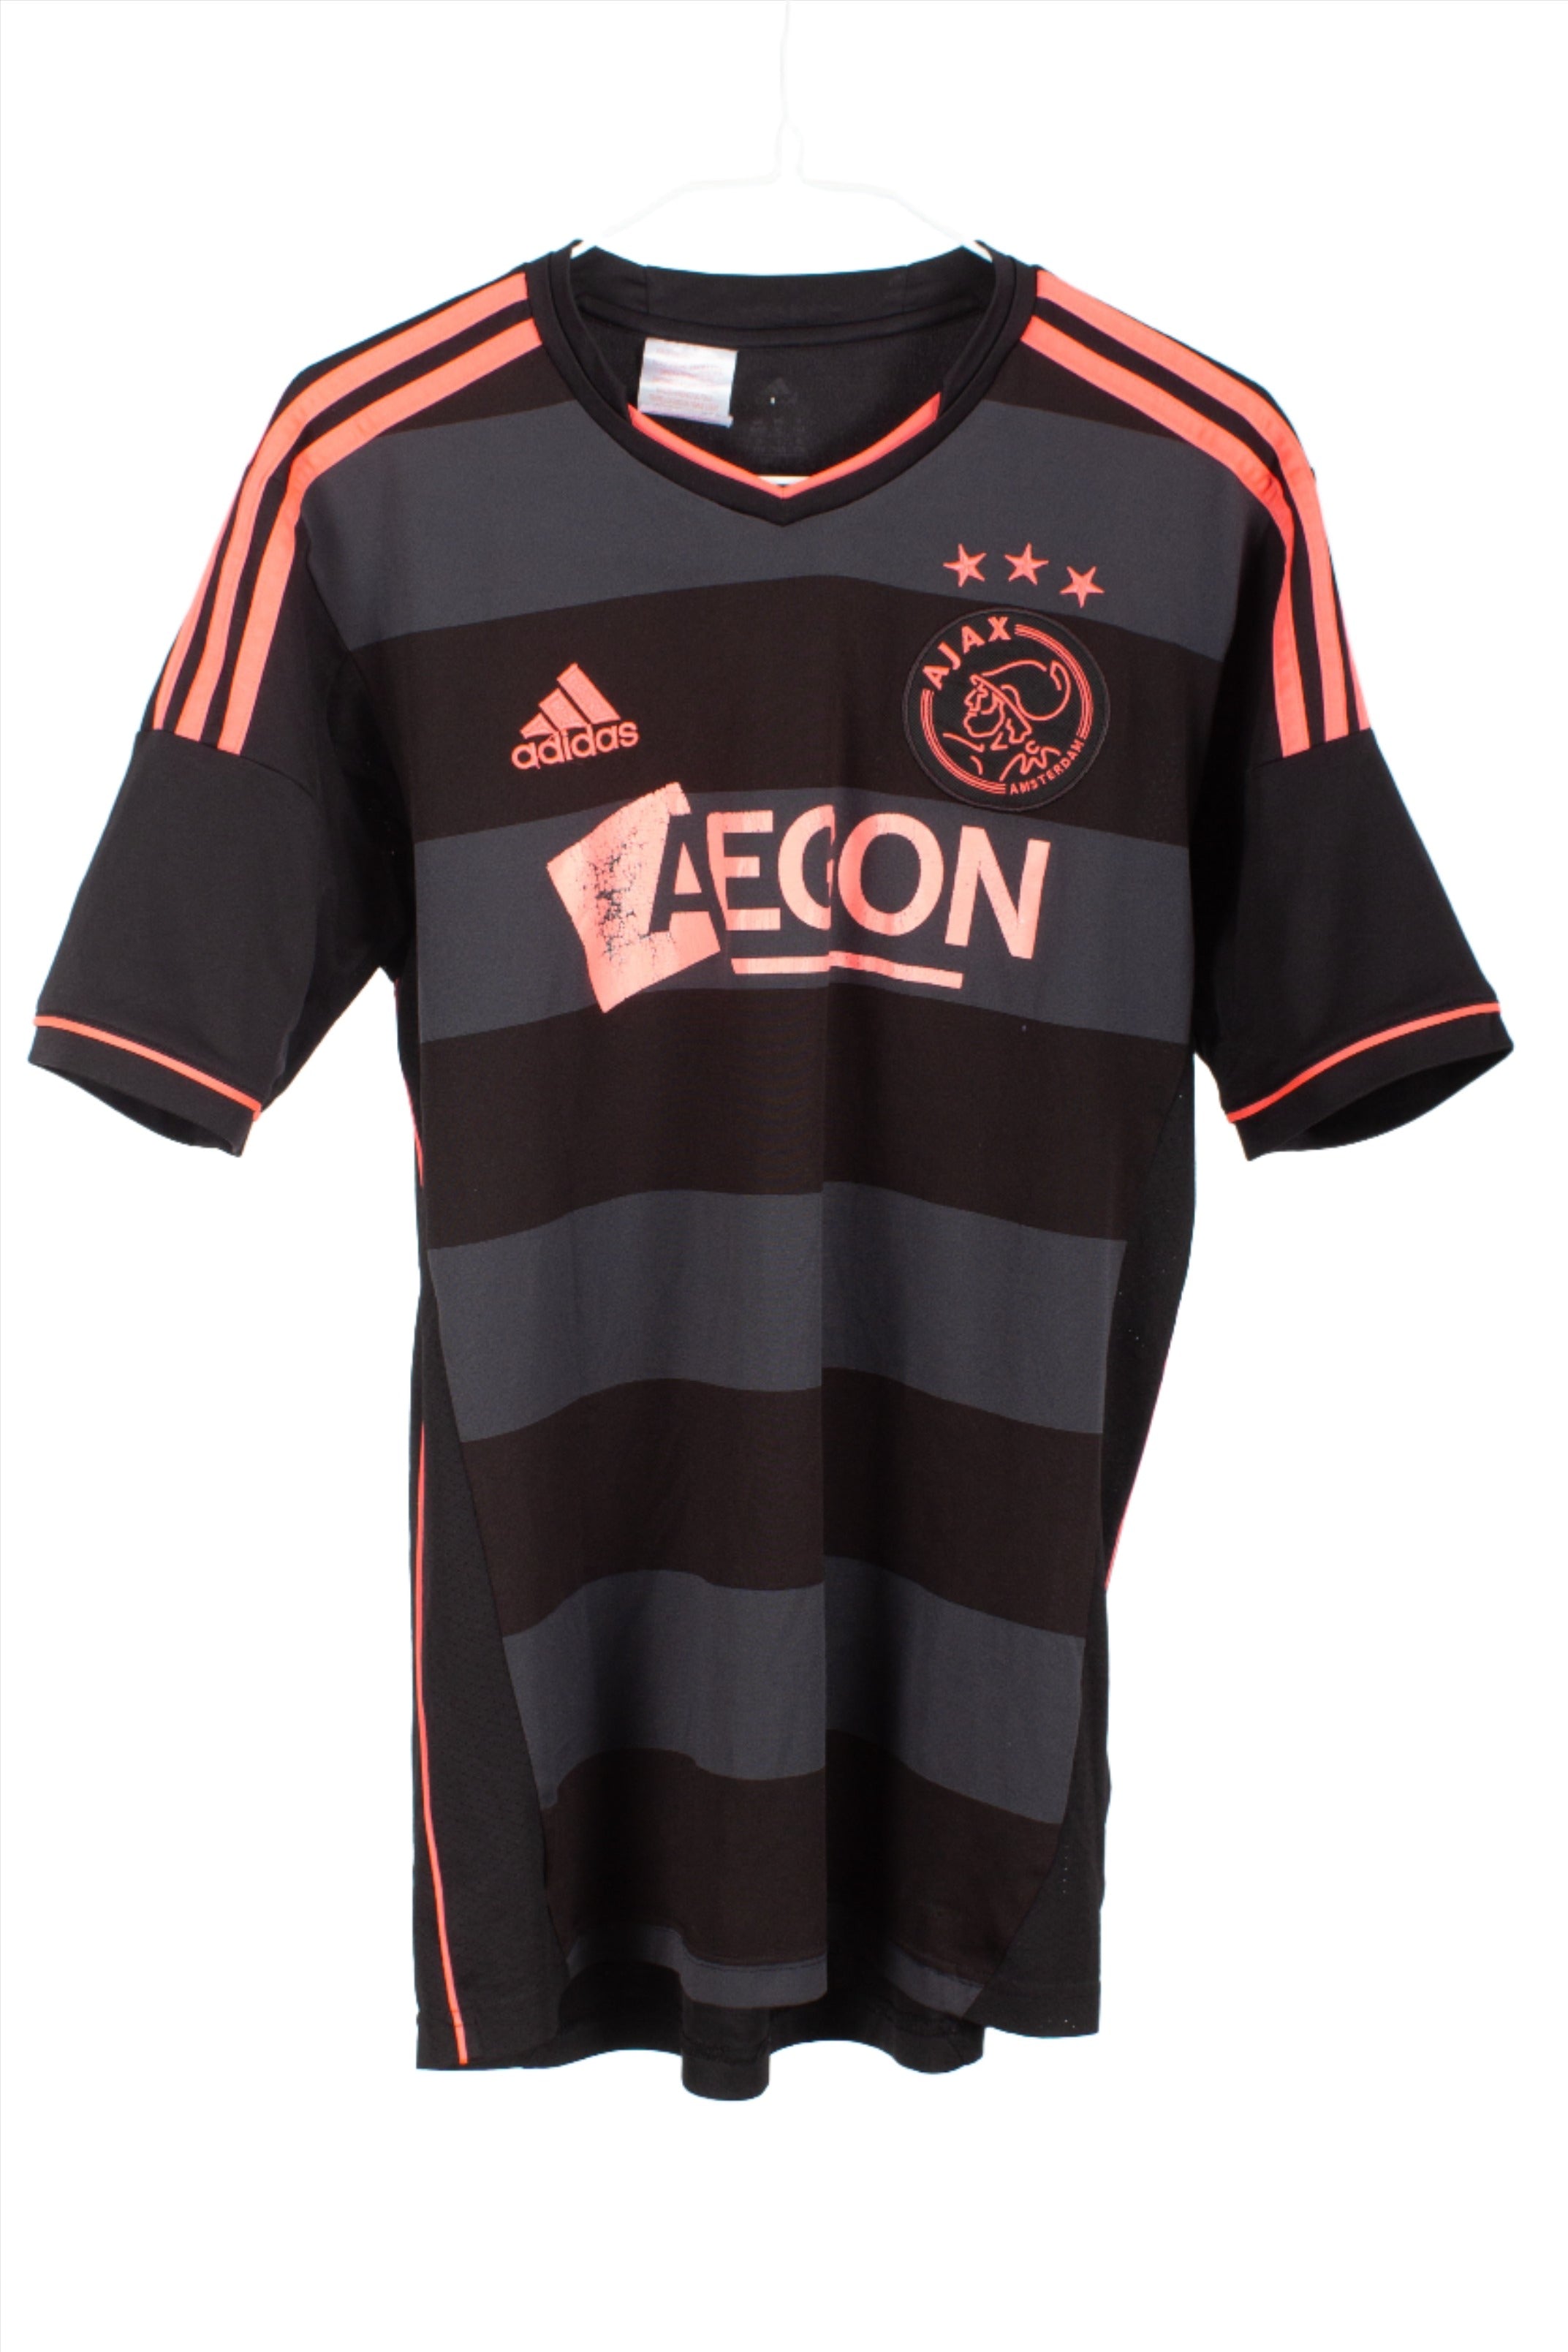 KIDS Ajax 2013/14 Football Shirt